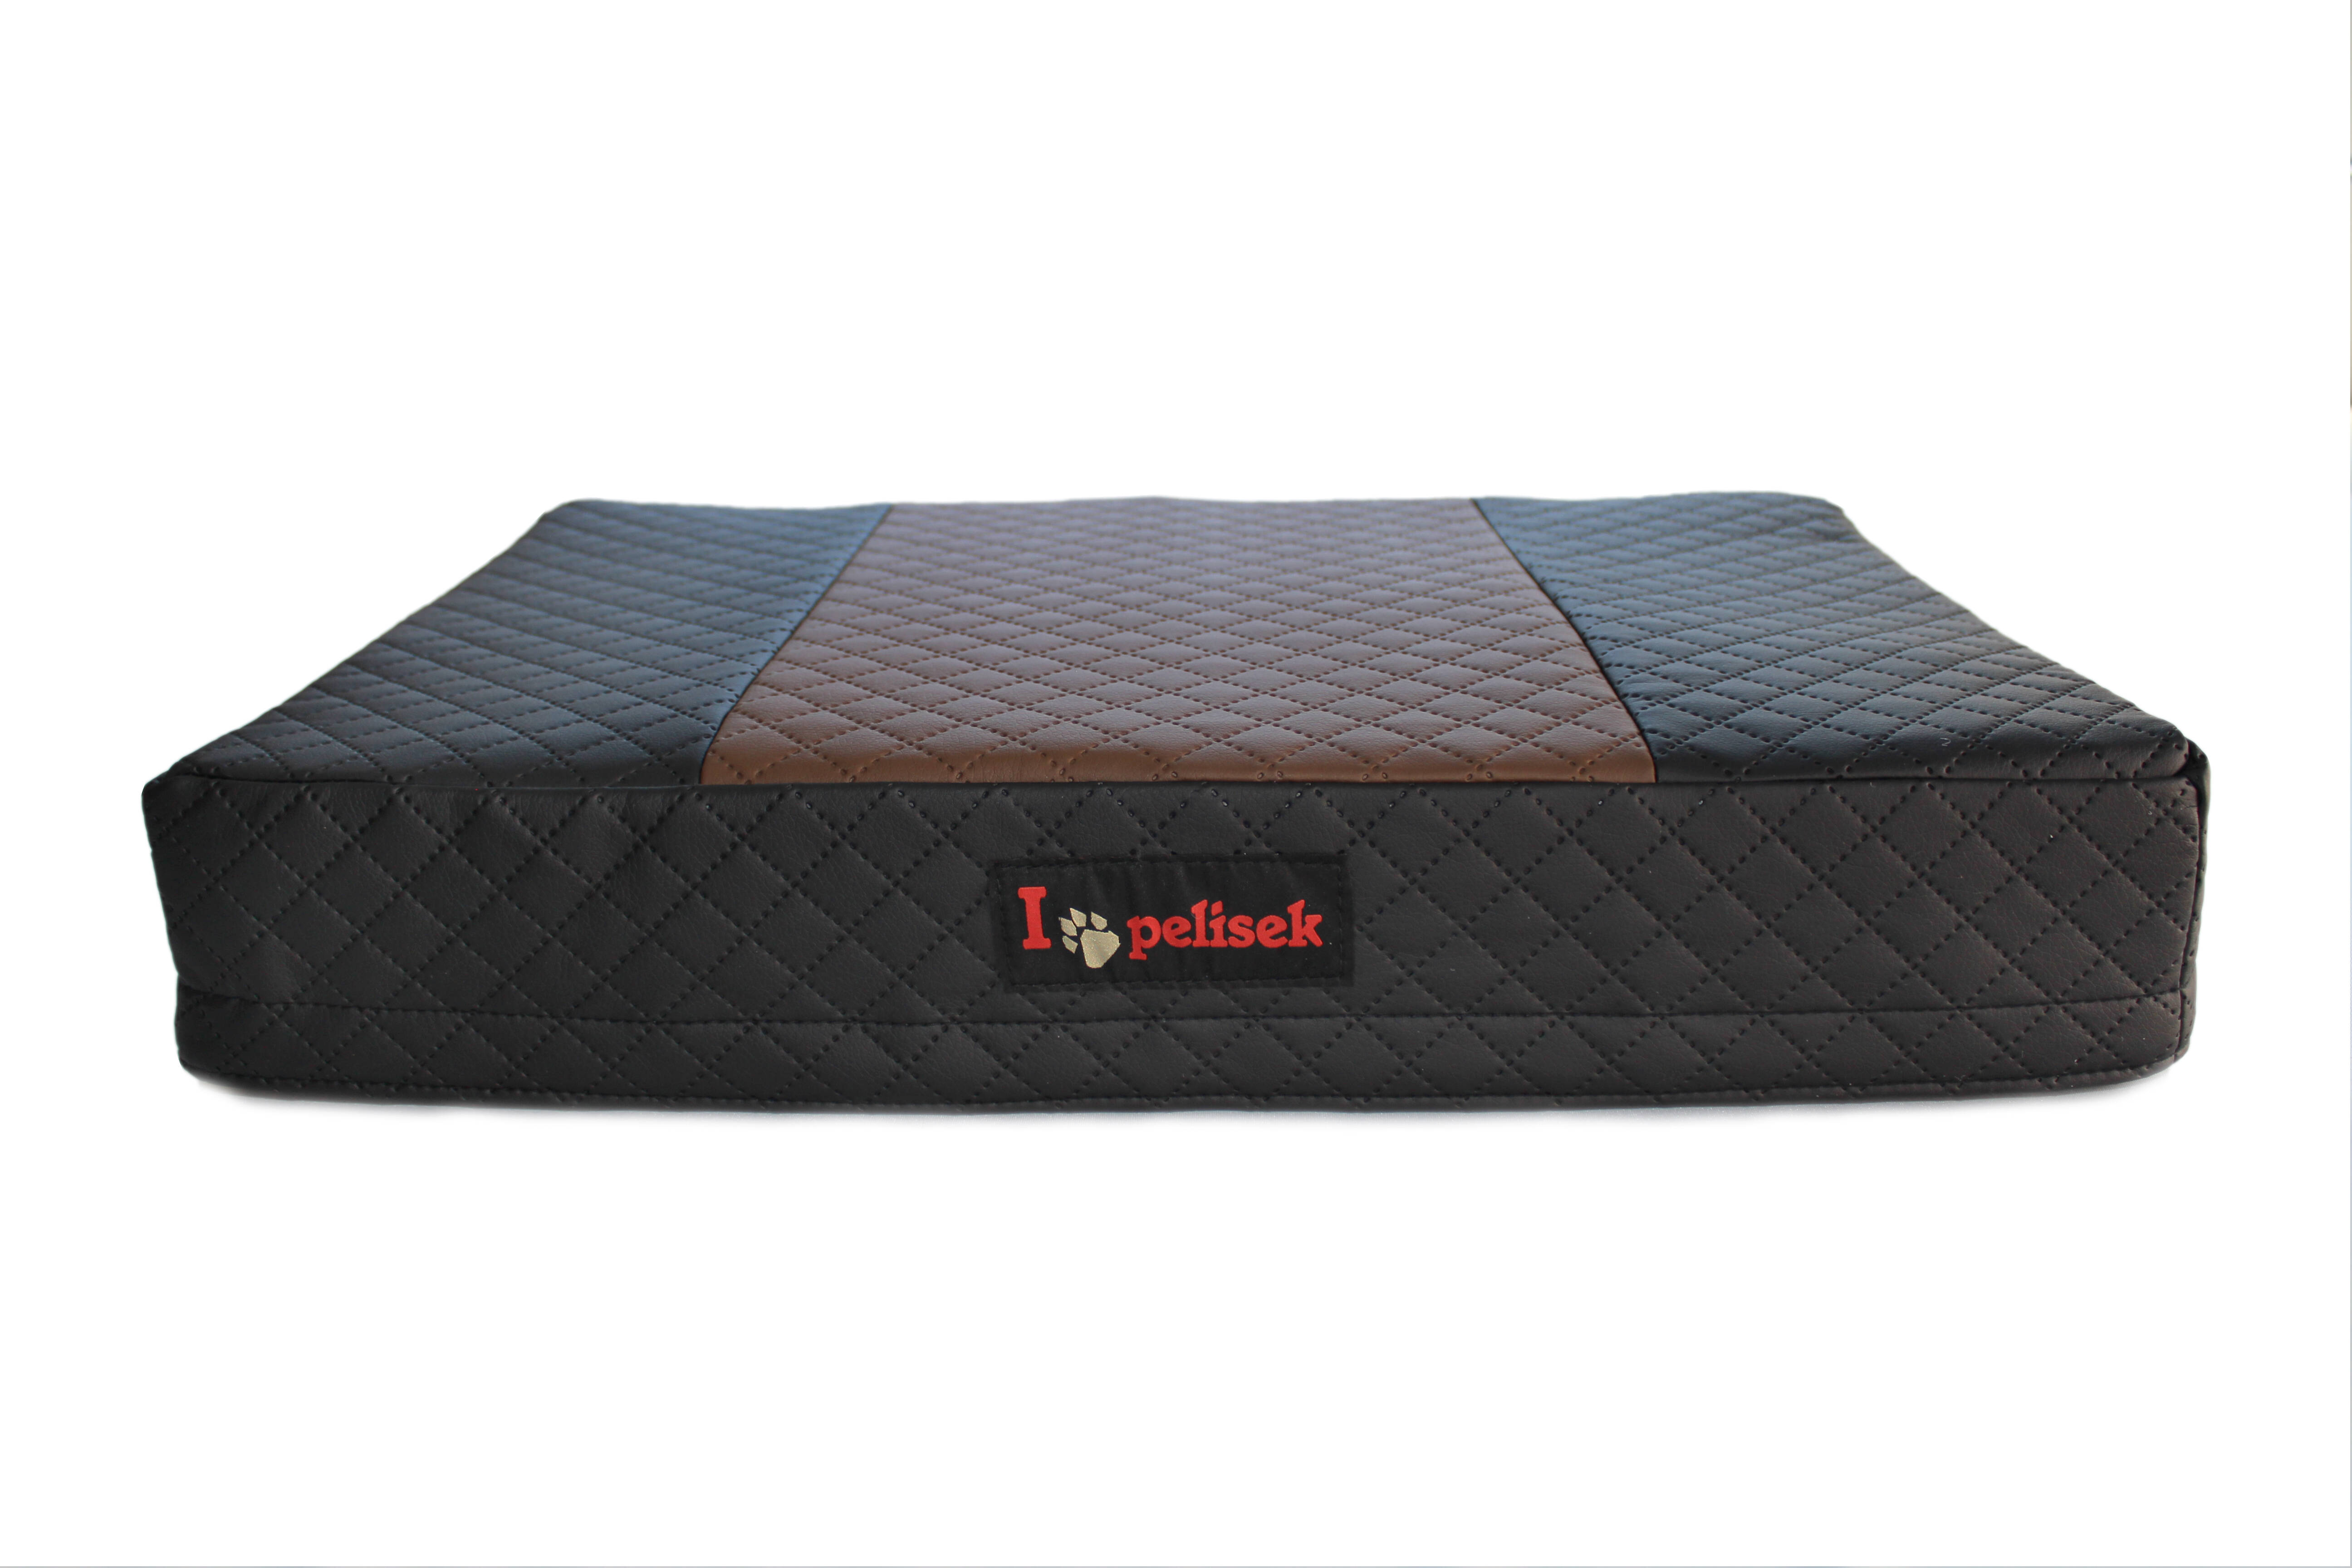 Orthopedic medical mattress for dog / cat I-pelisek ECO leather Blaxk x Brown